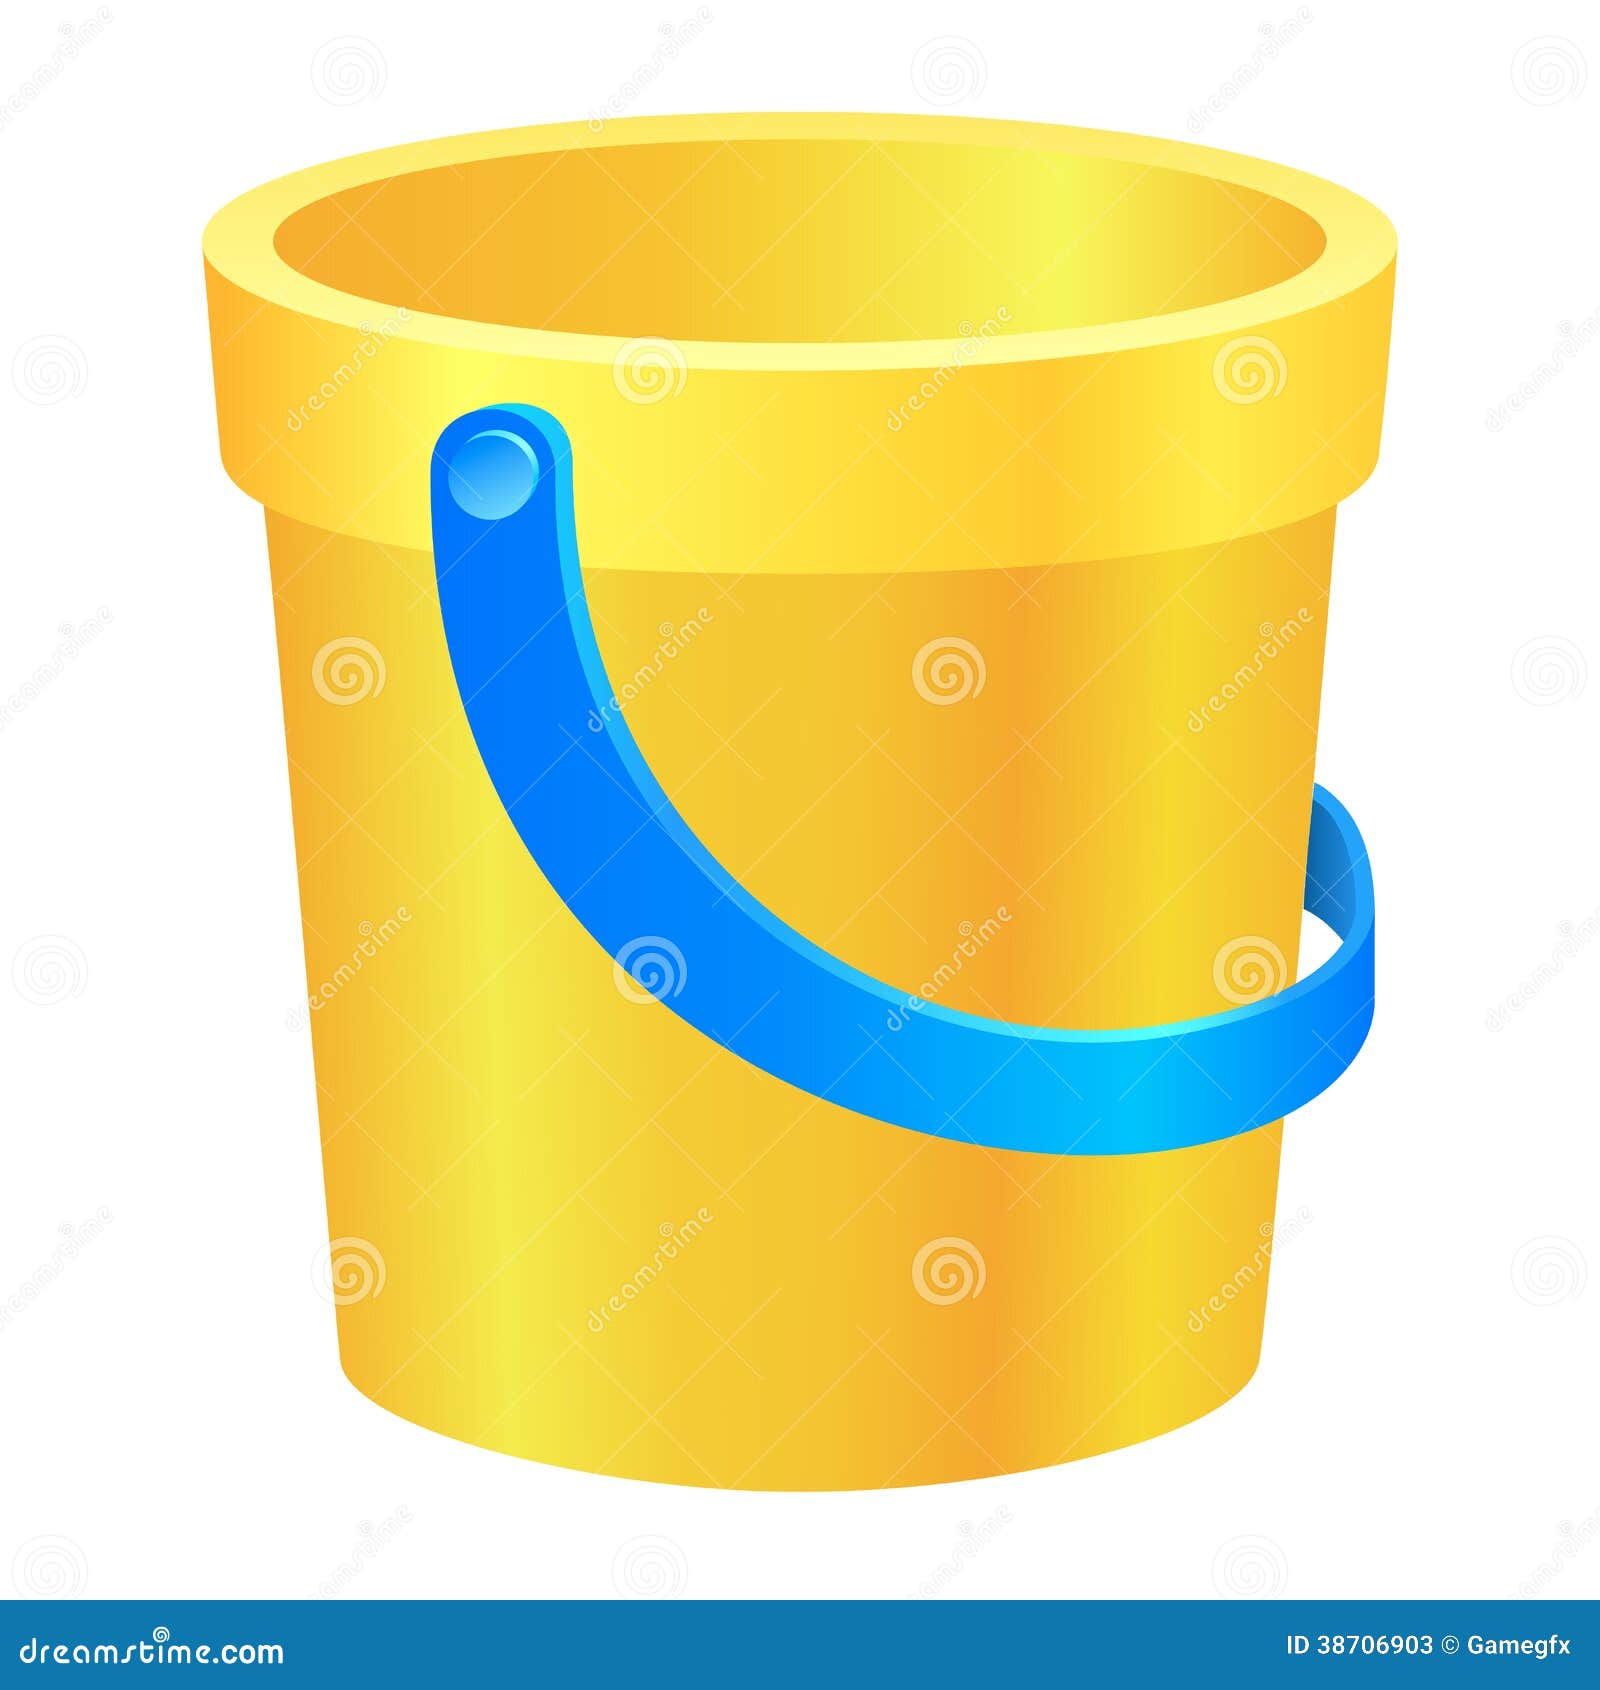 Bucket of paydirt